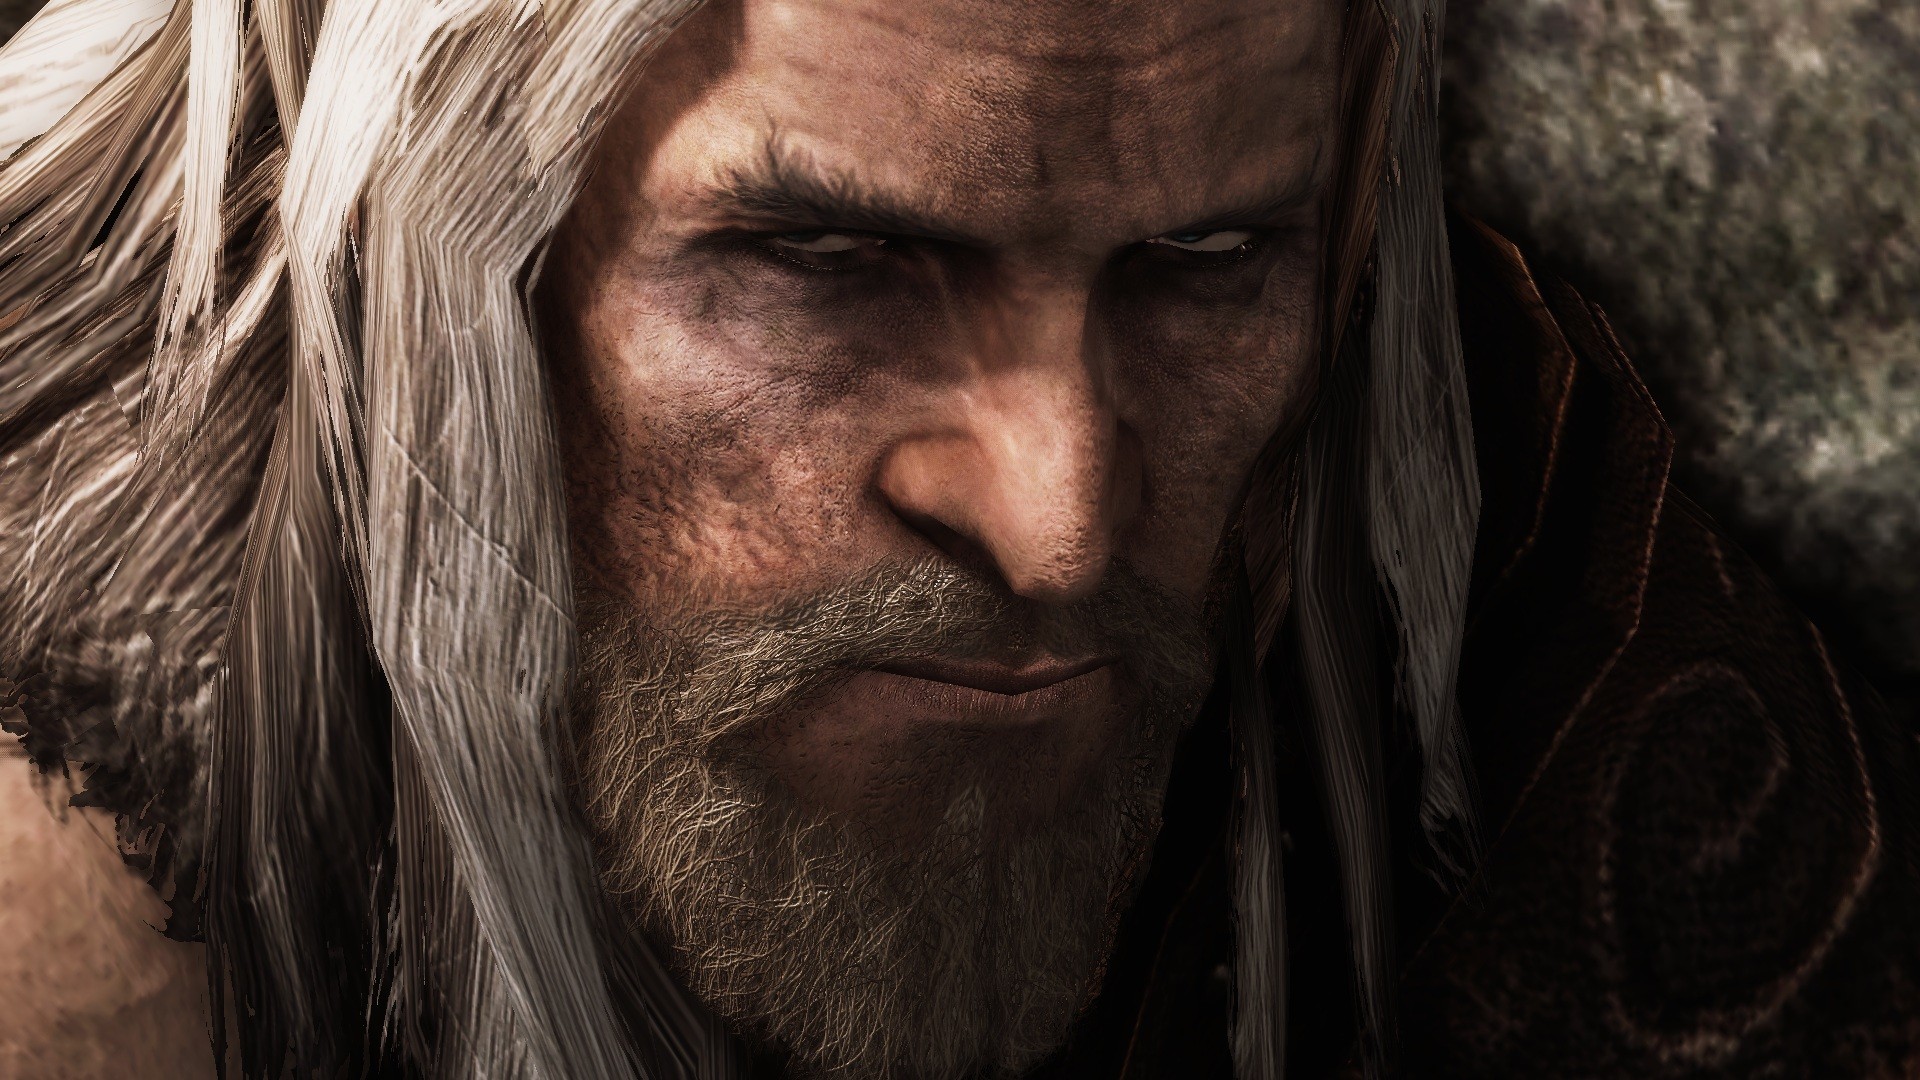 General 1920x1080 The Elder Scrolls V: Skyrim old people realistic video game men fantasy men RPG video games PC gaming white hair closeup face beard men